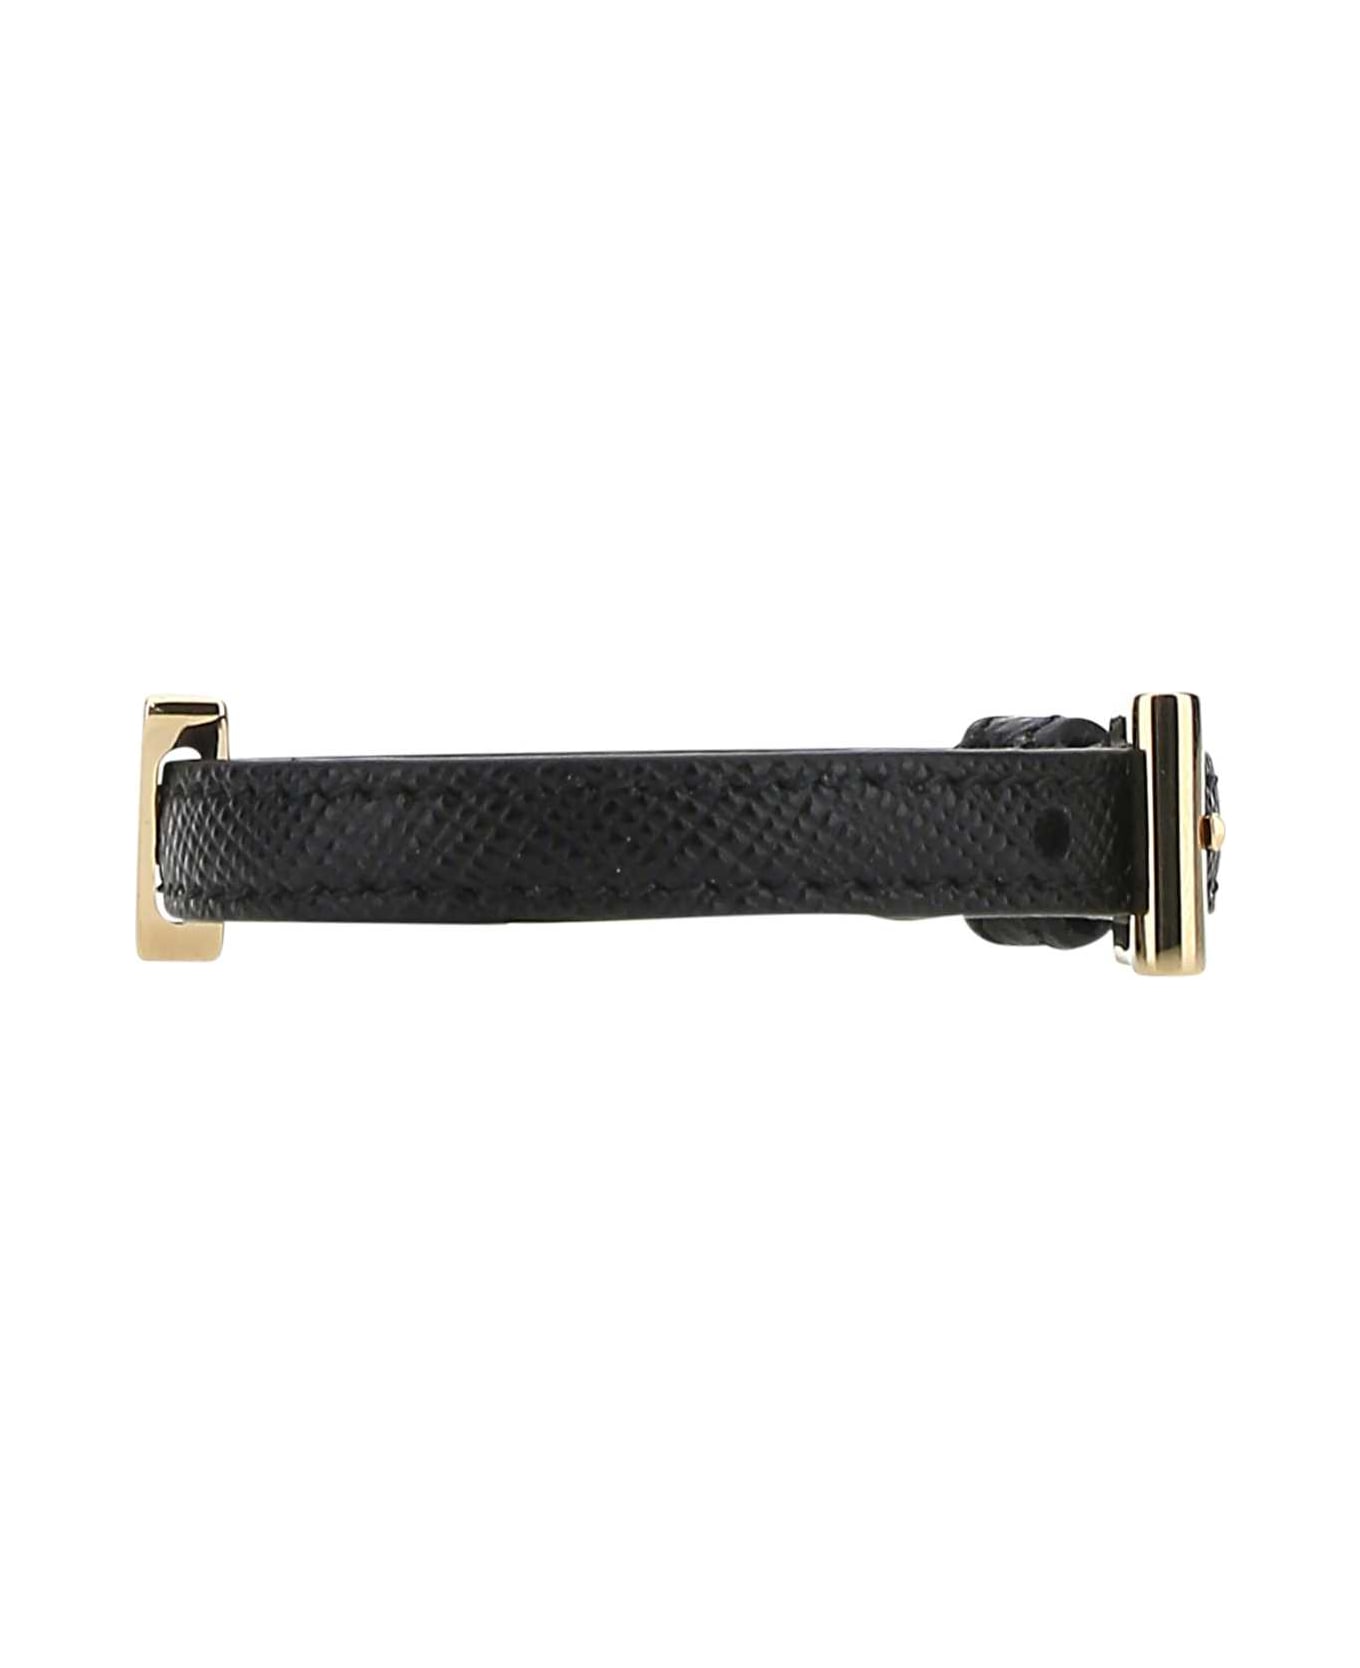 Prada Black Leather Bracelet - F0002 ブレスレット